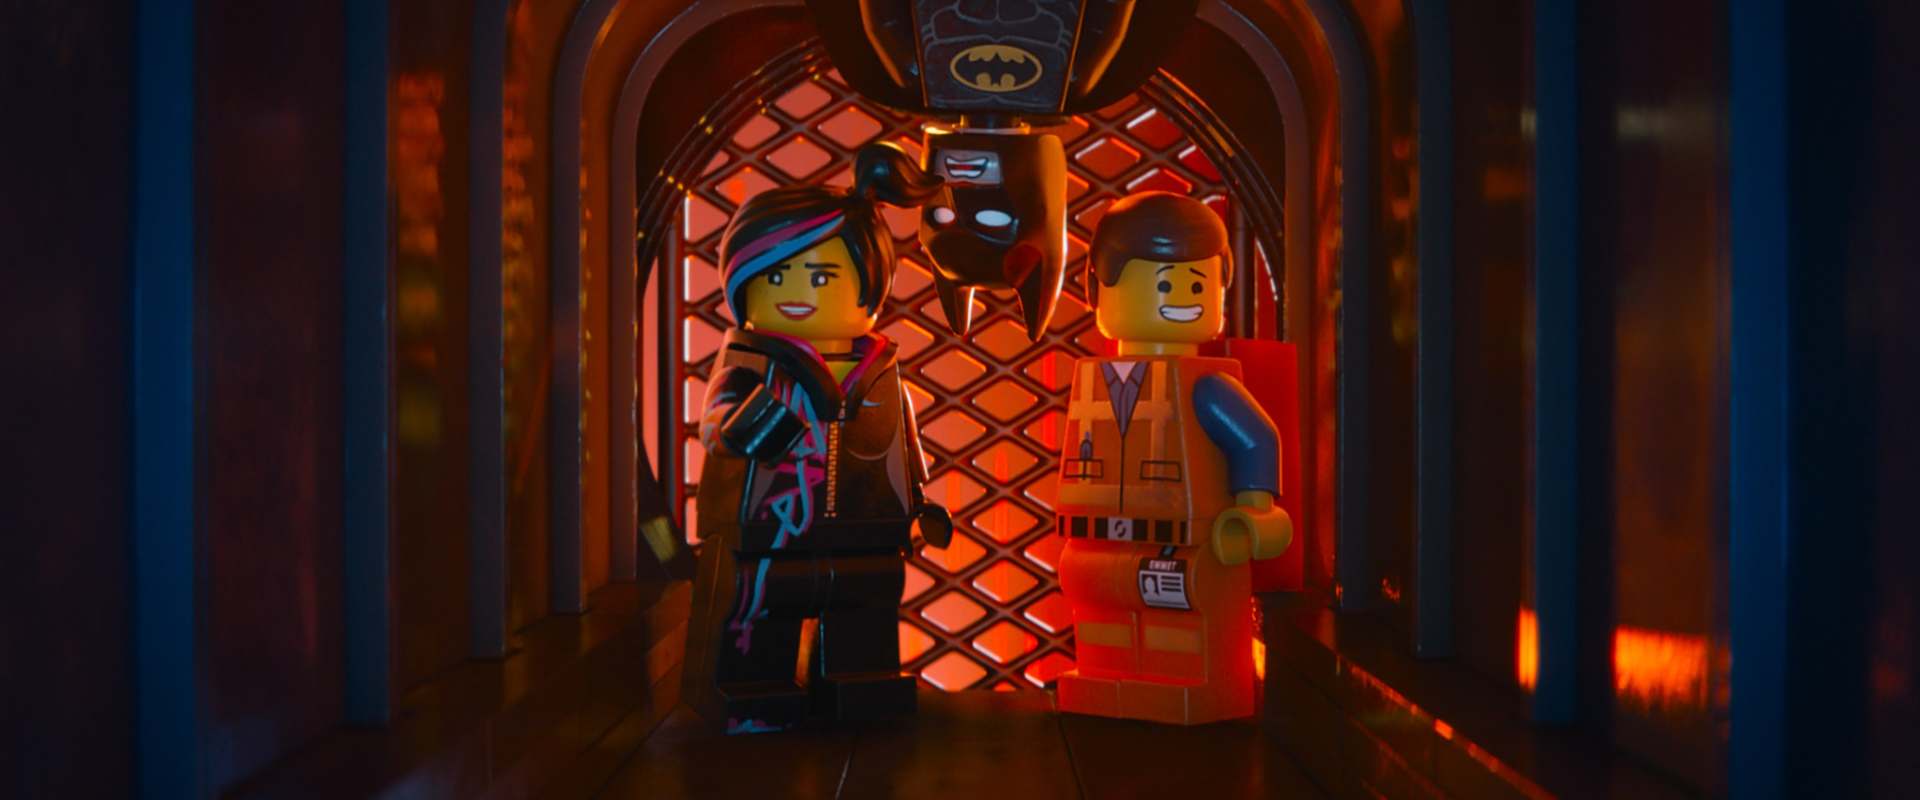 The Lego Movie background 2